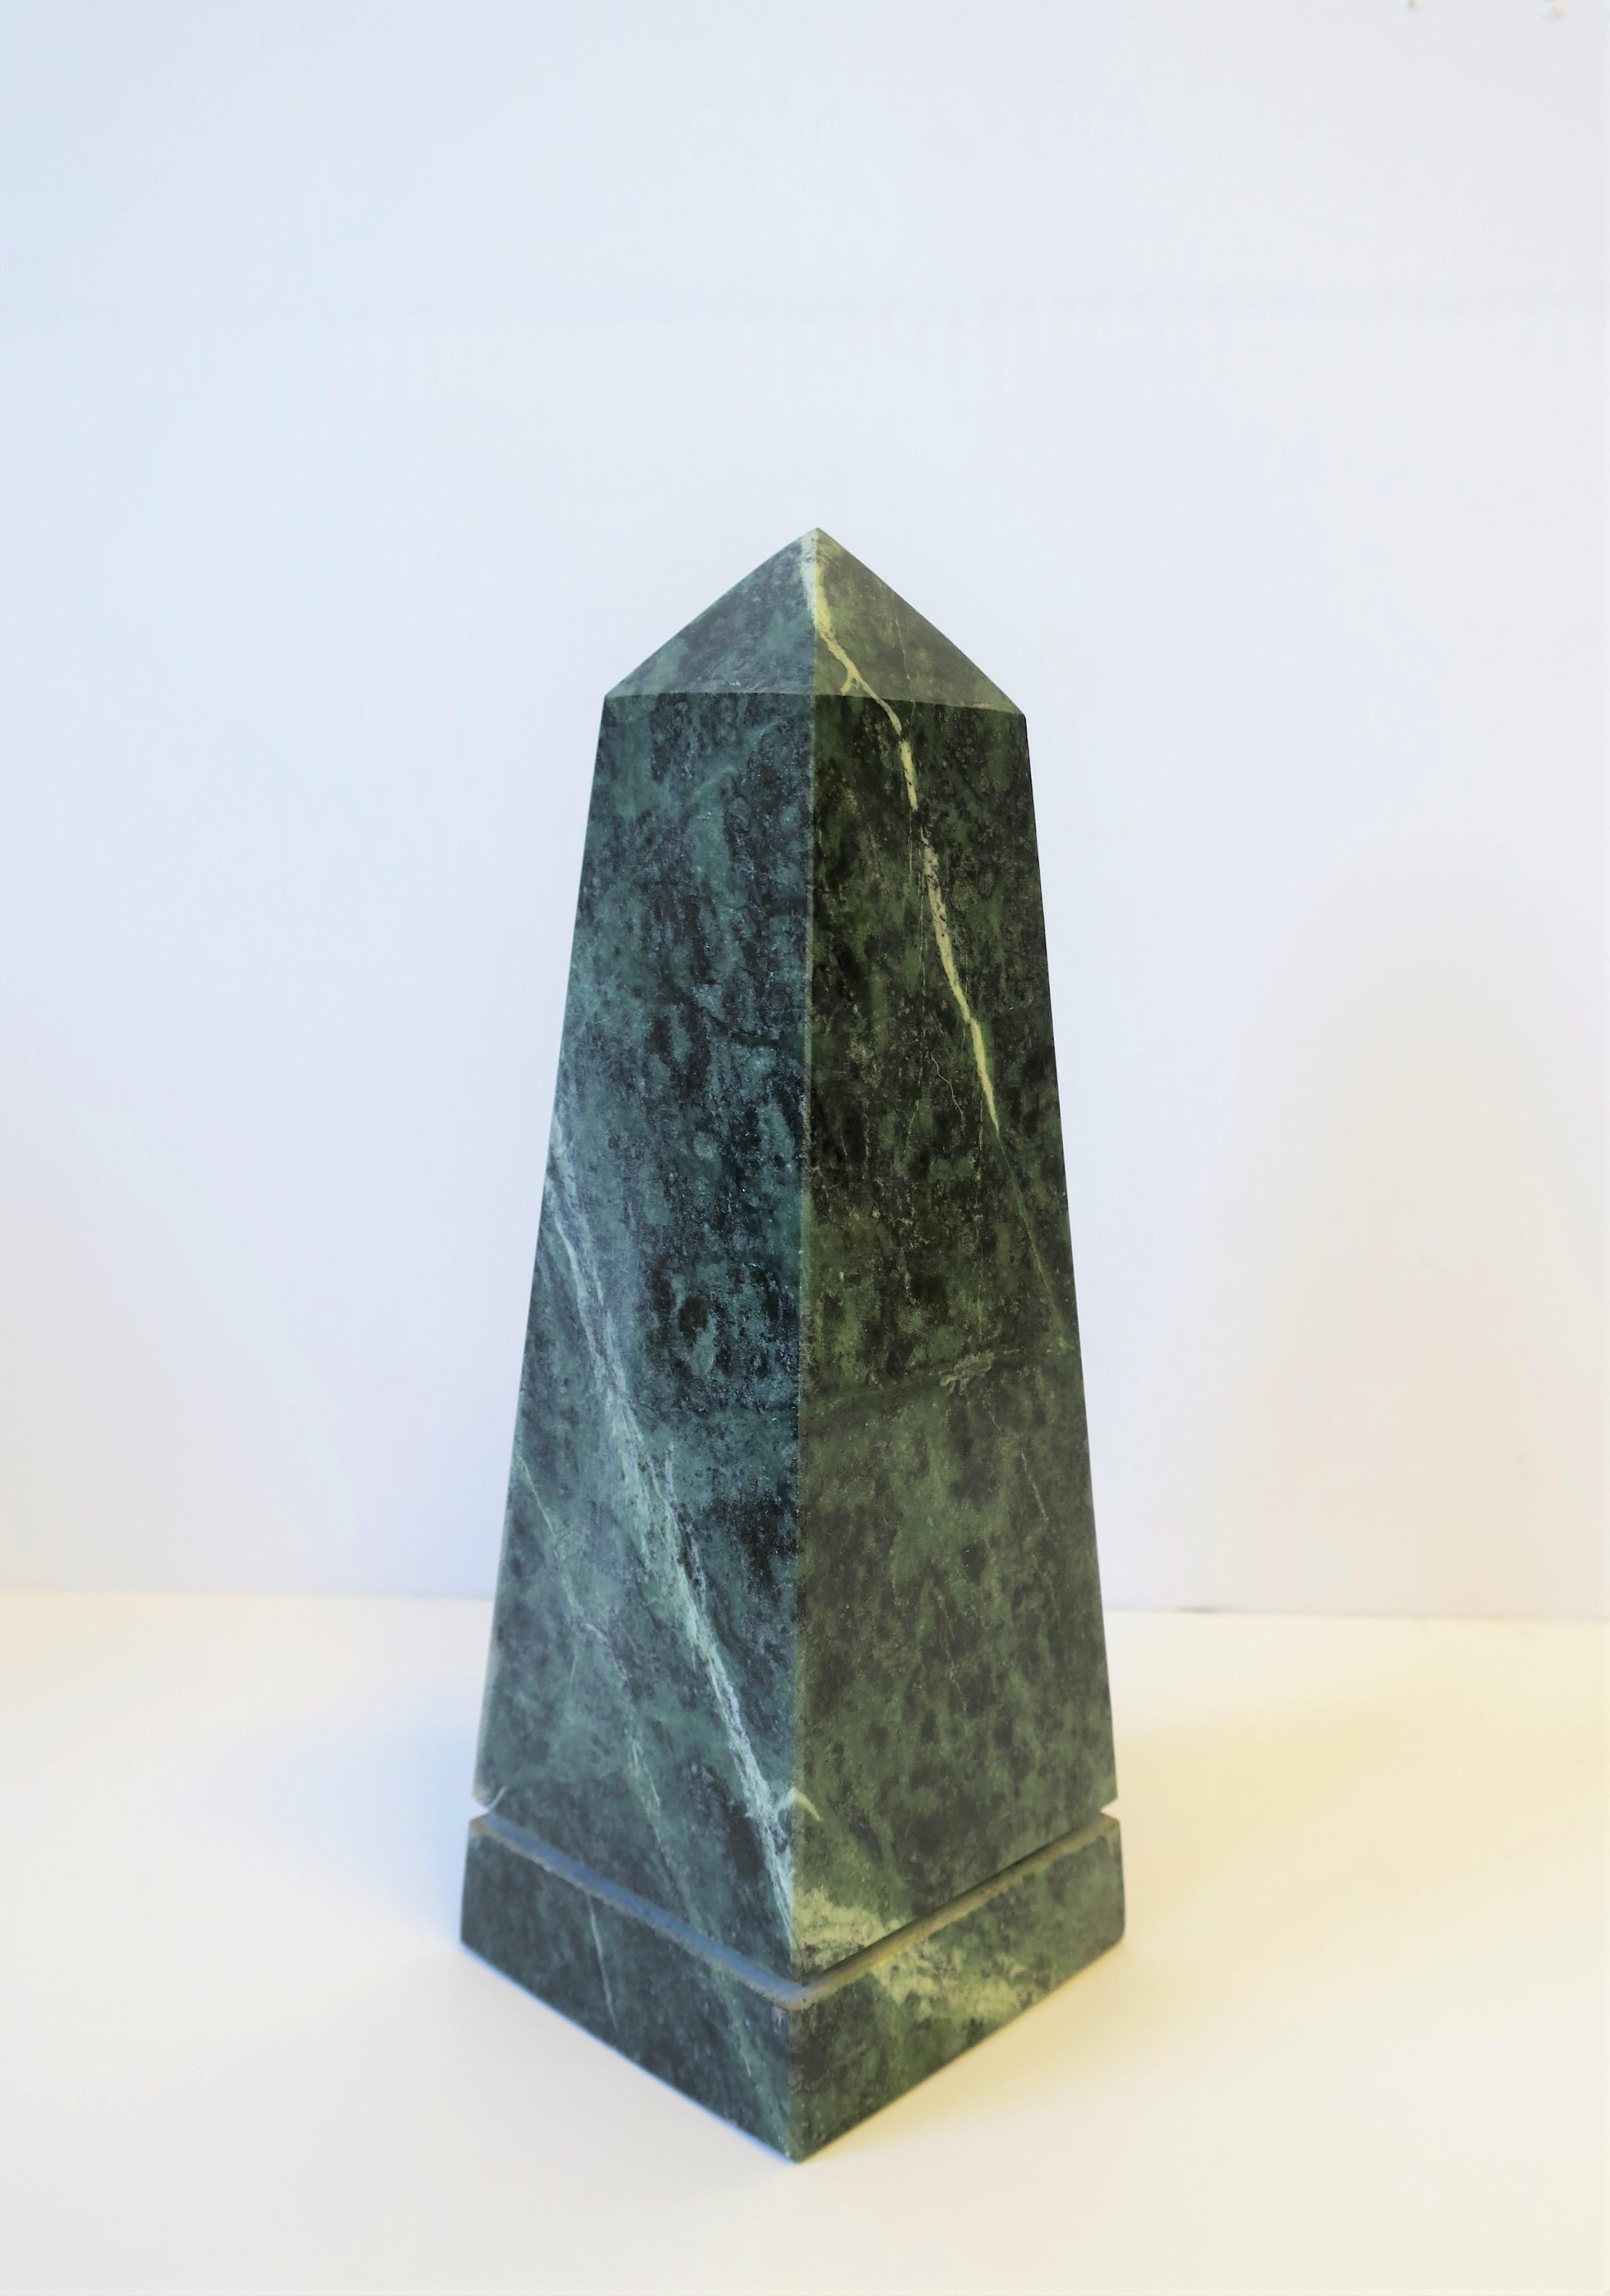 Italian Modern Dark Green Marble Obelisk Sculpture, circa 1970s For Sale 1